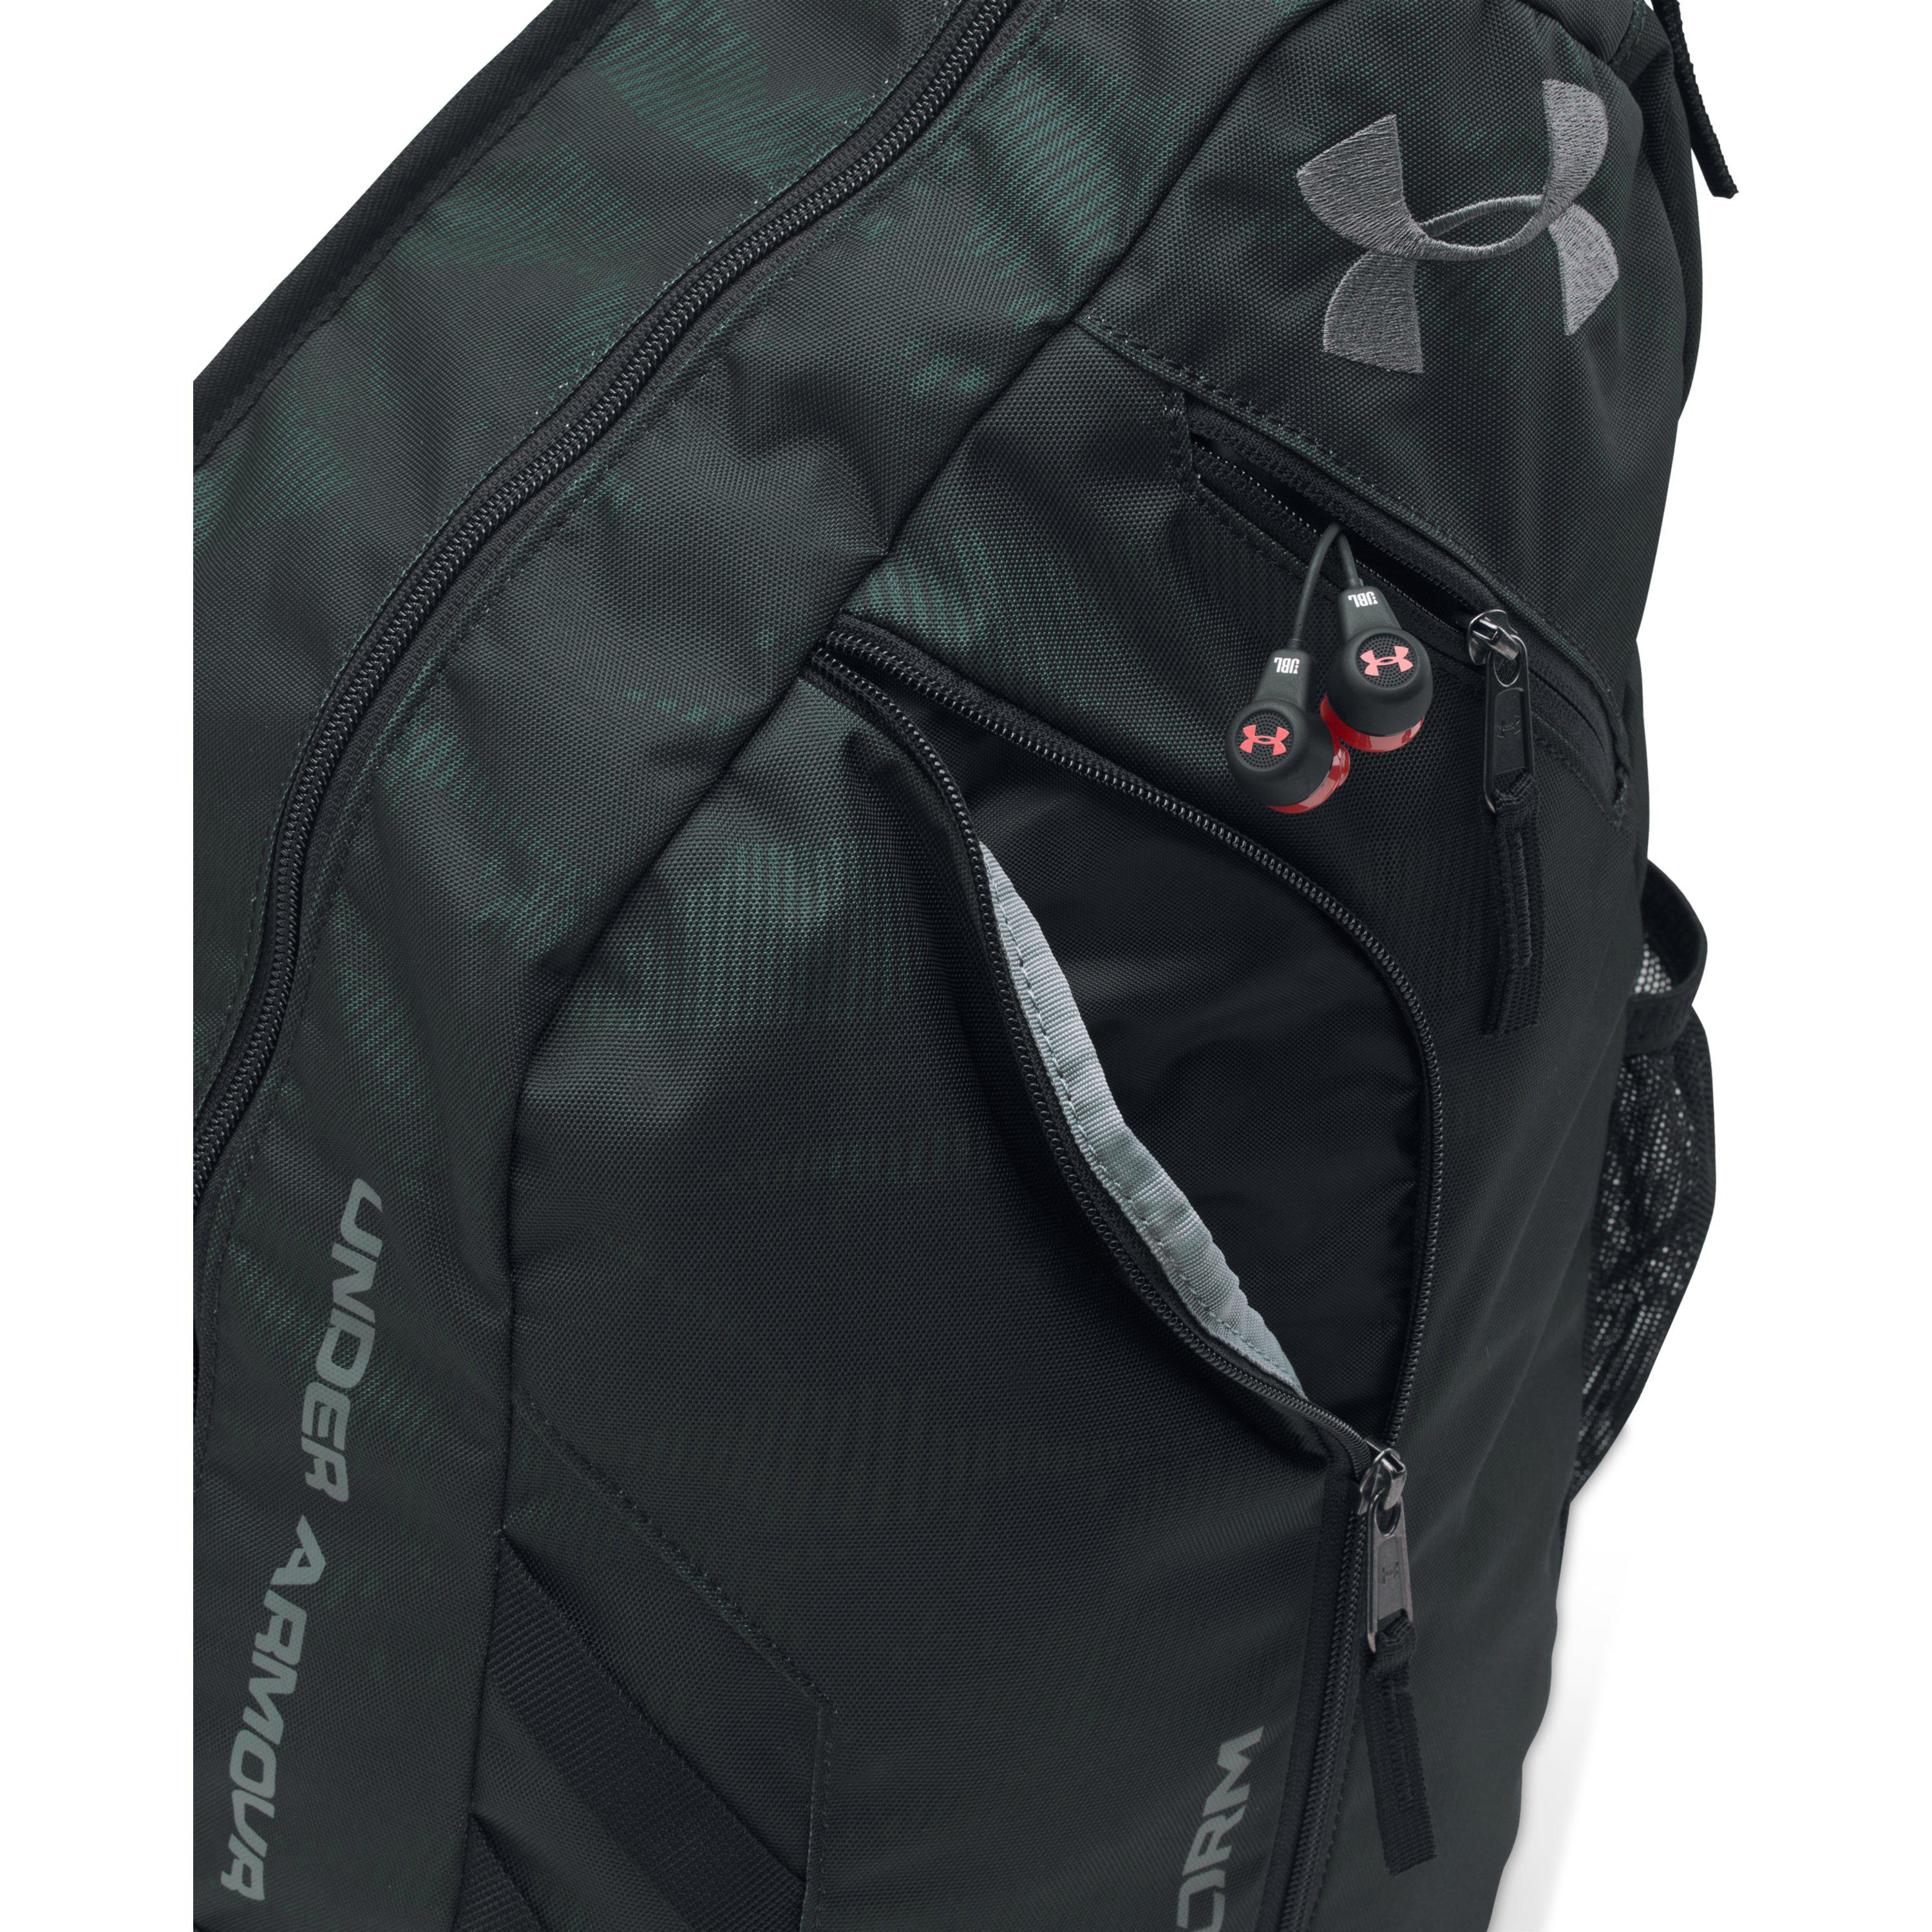 ua compel sling 2.0 backpack